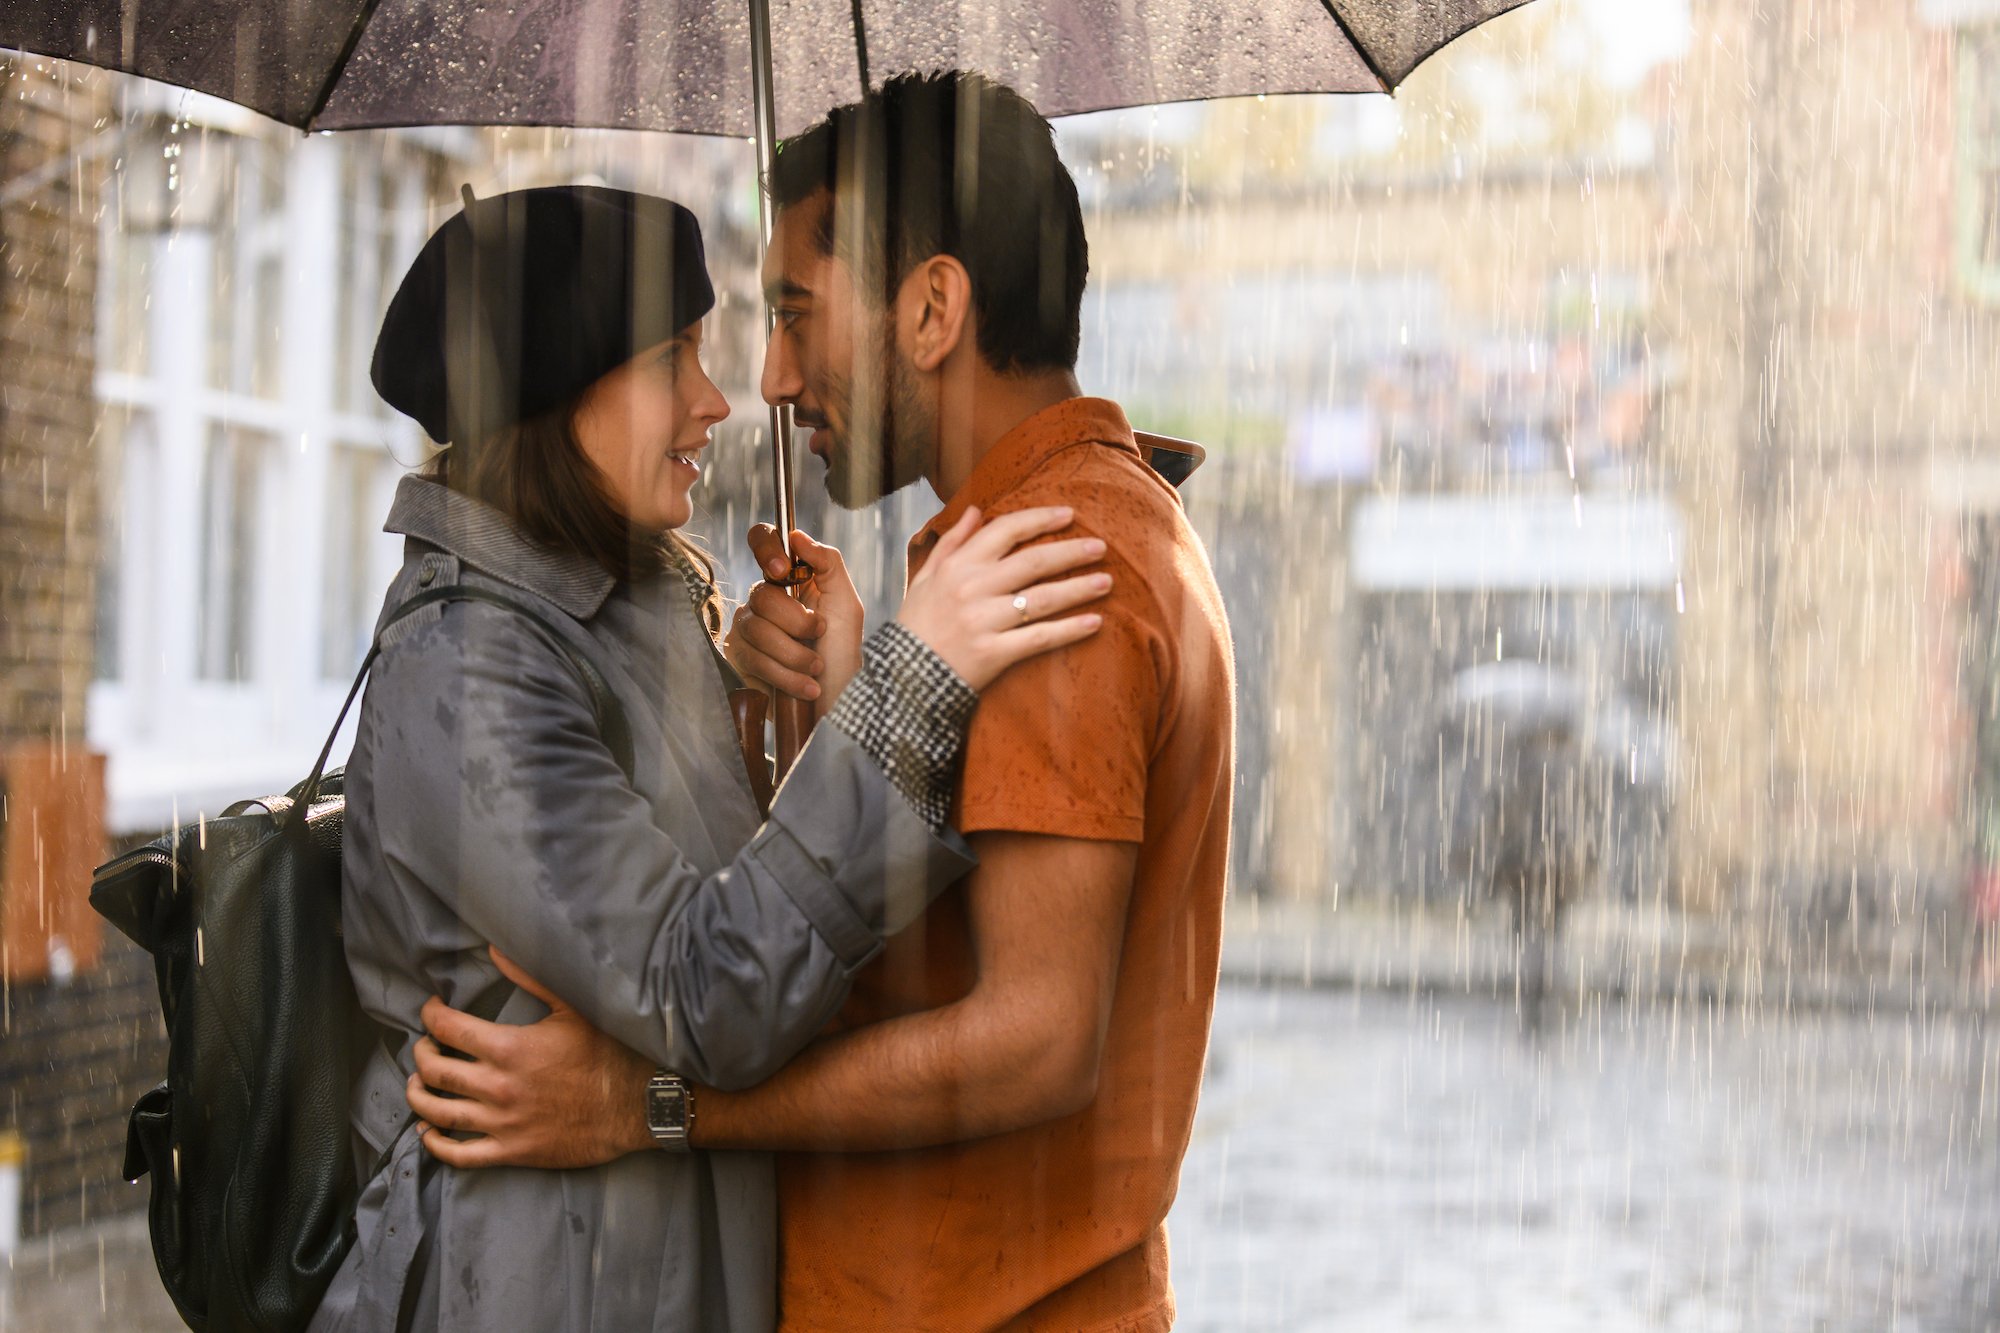 Felicity Jones and Nabhaan Rizwan stand under an umbrella in the rain